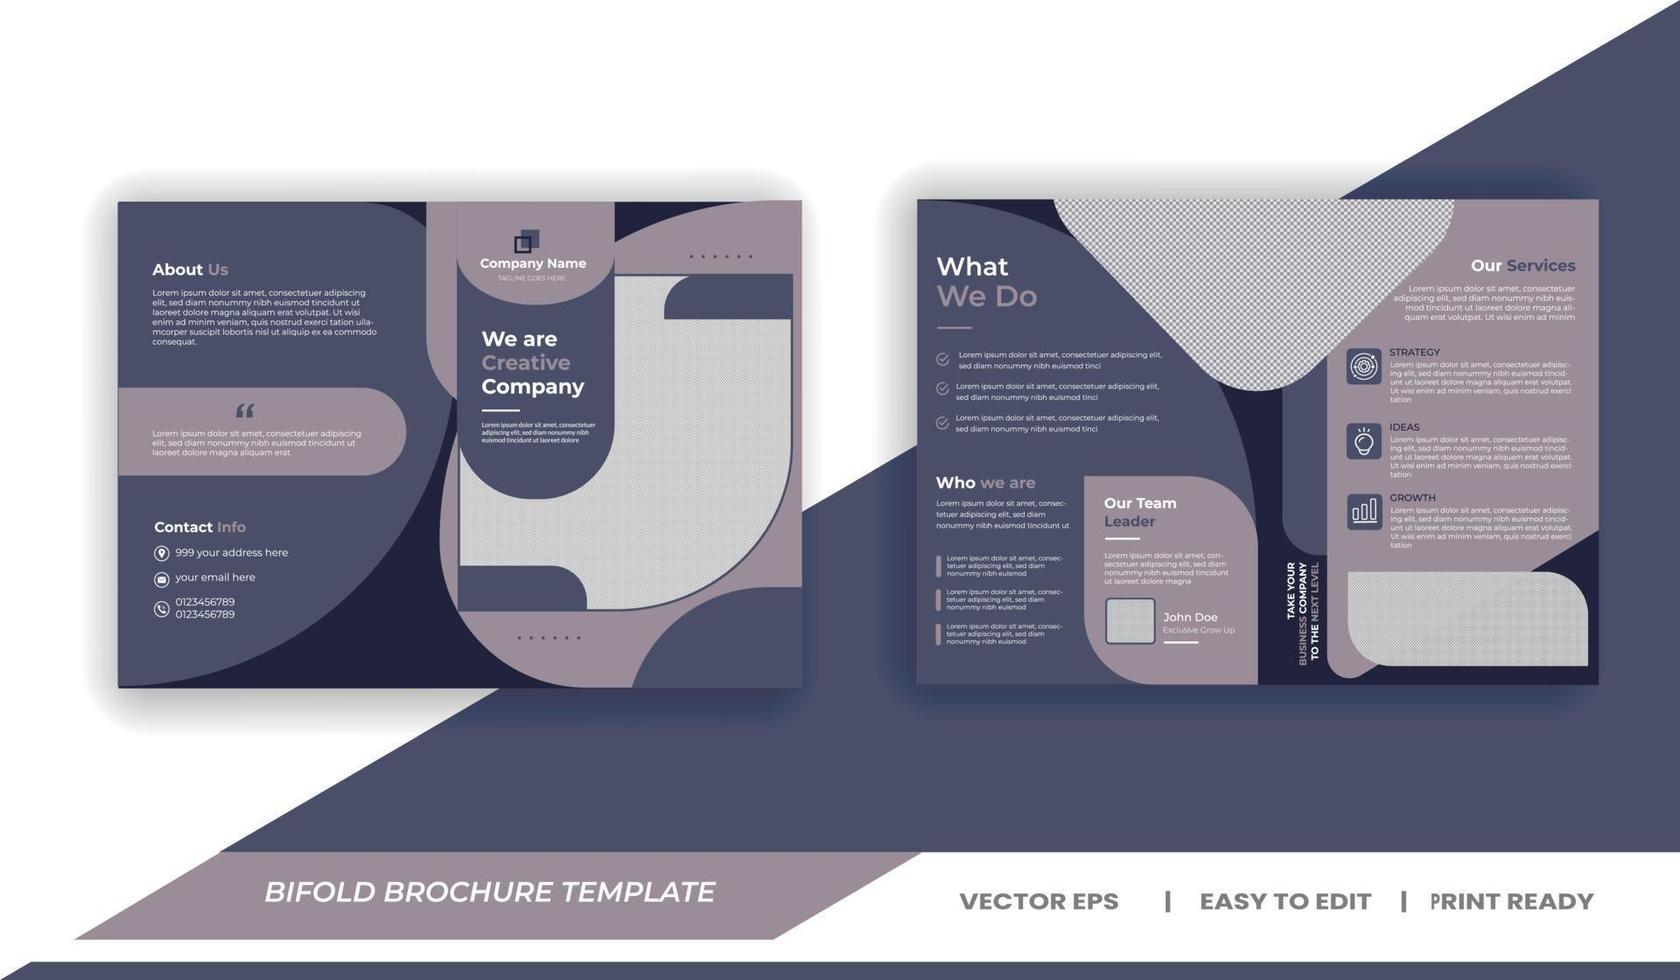 Bifold Brochure Template - Professional business brochure, bi fold template,cover page, half fold brochures - corporate brochure - 05 vector